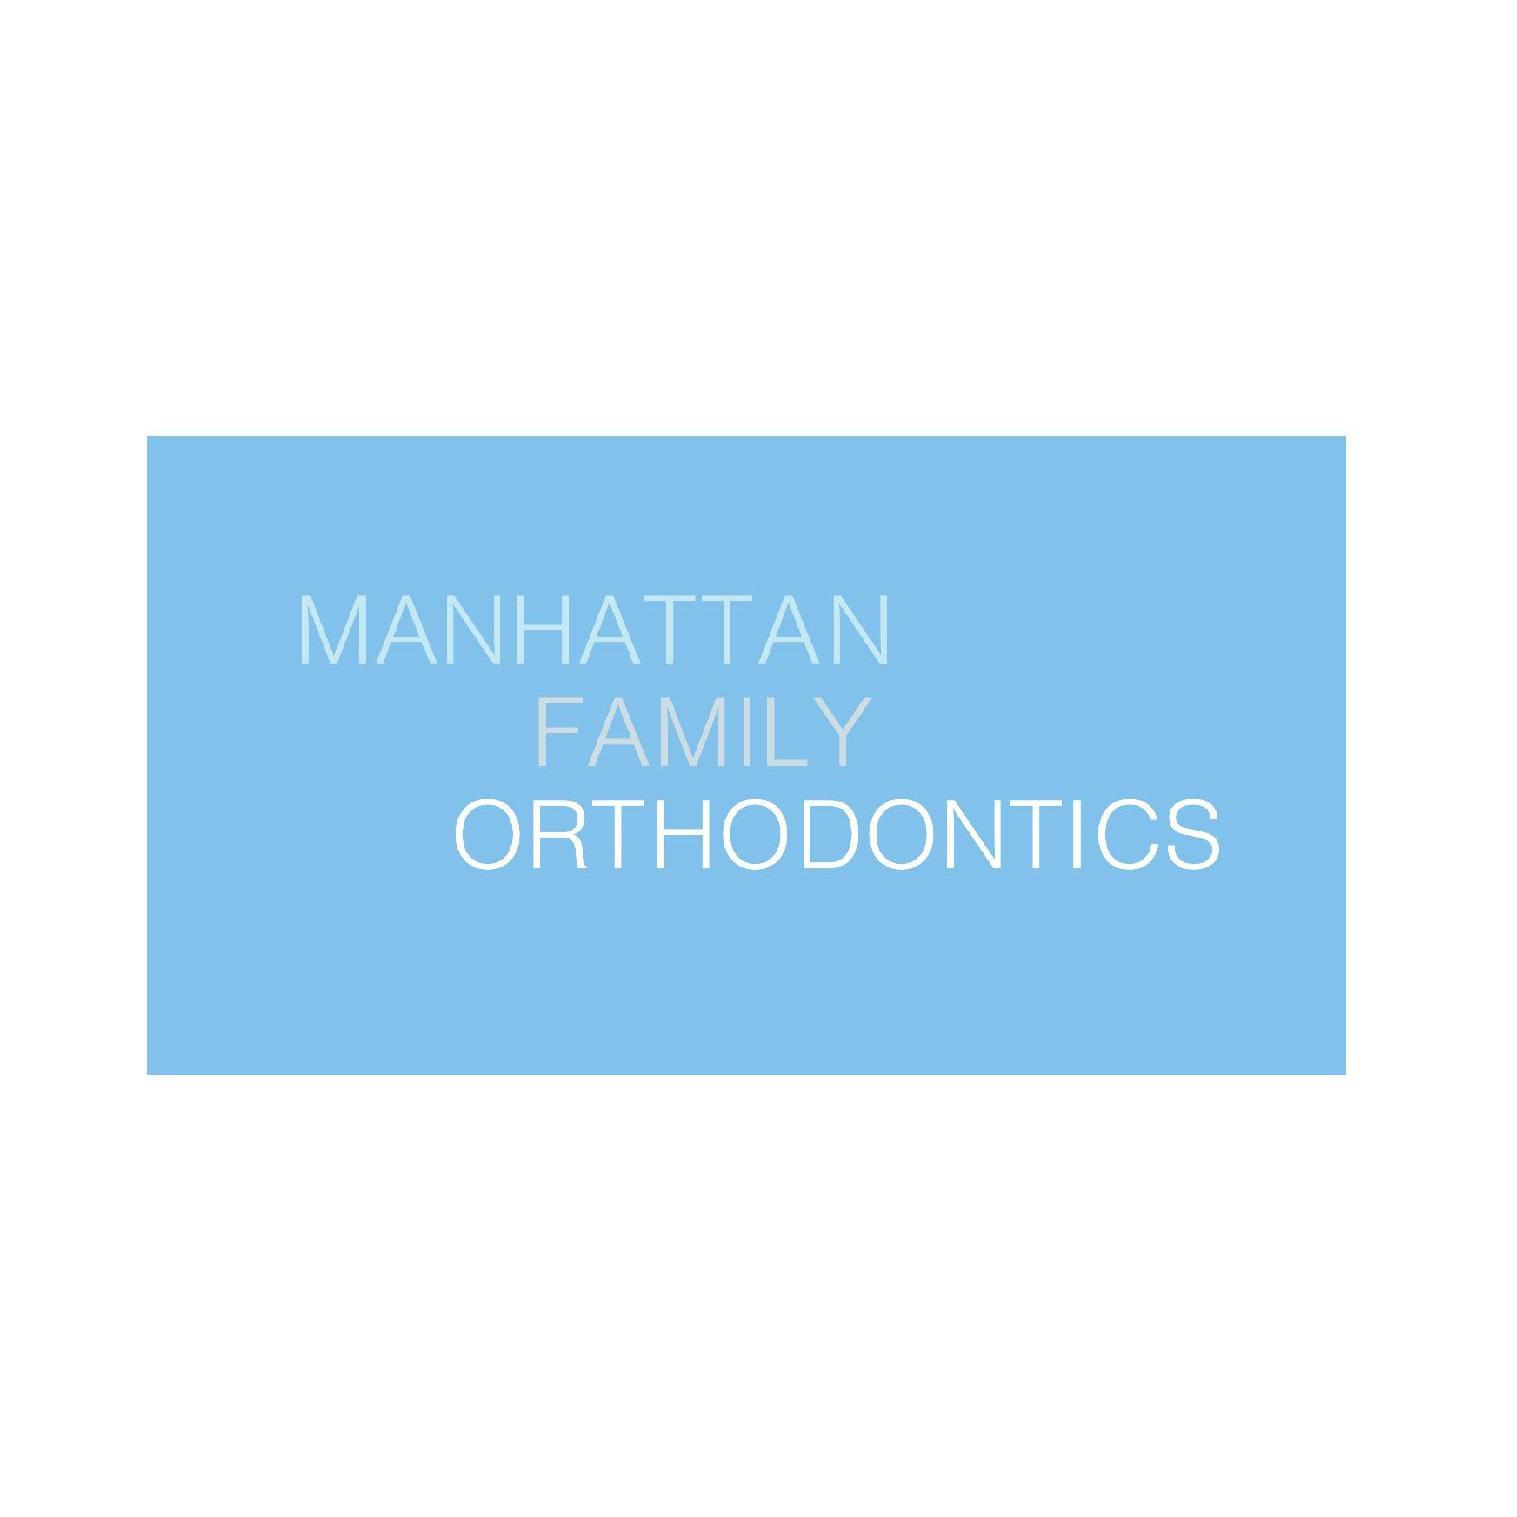 Manhattan Family Orthodontics - New York, NY 10022 - (212)207-8028 | ShowMeLocal.com